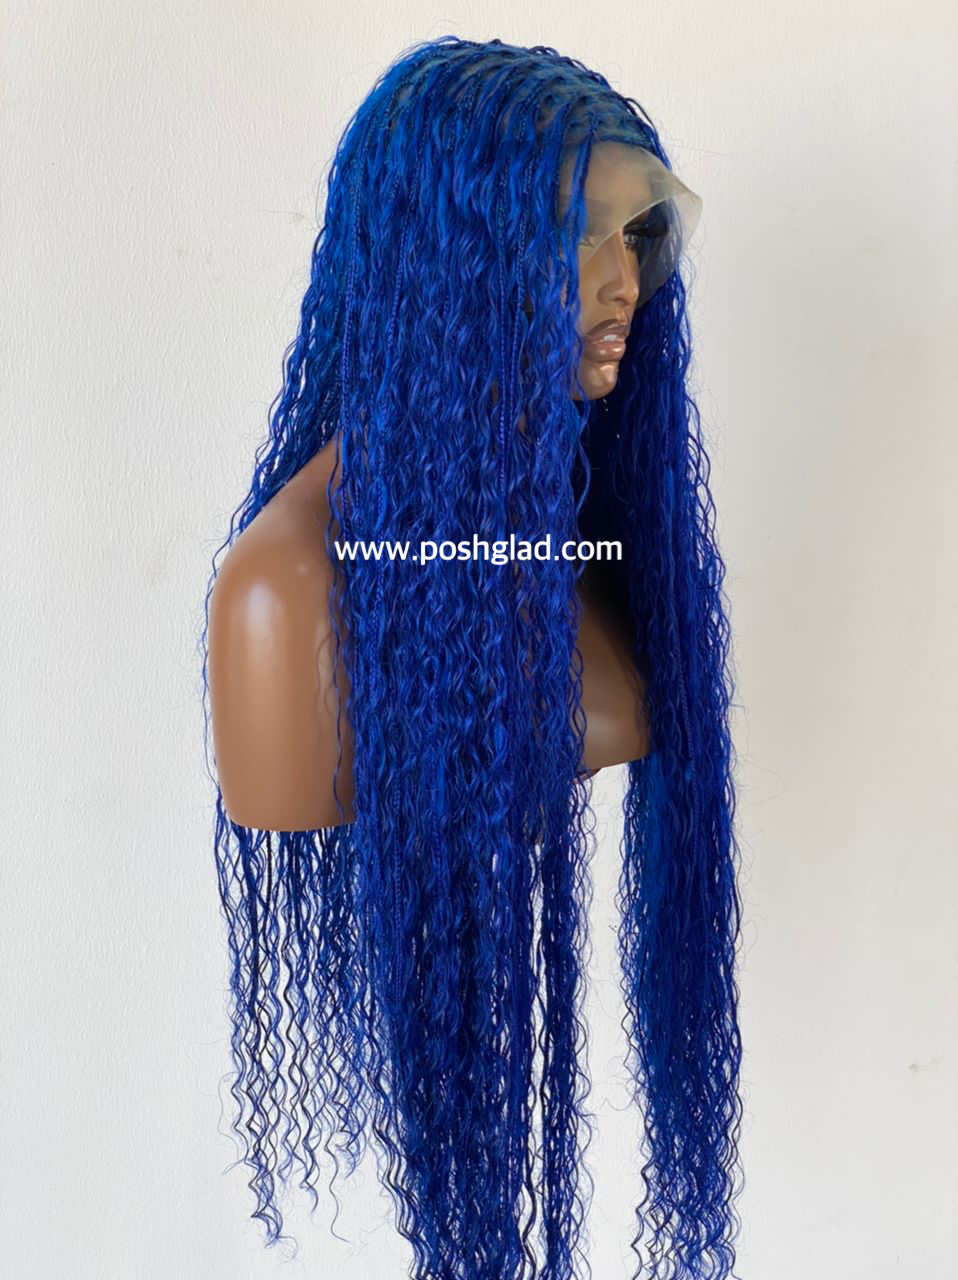 Bohemian Knotless Braid Wig (100% Human Hair Curls) Full Lace - Tara B -  Poshglad Braided Wigs